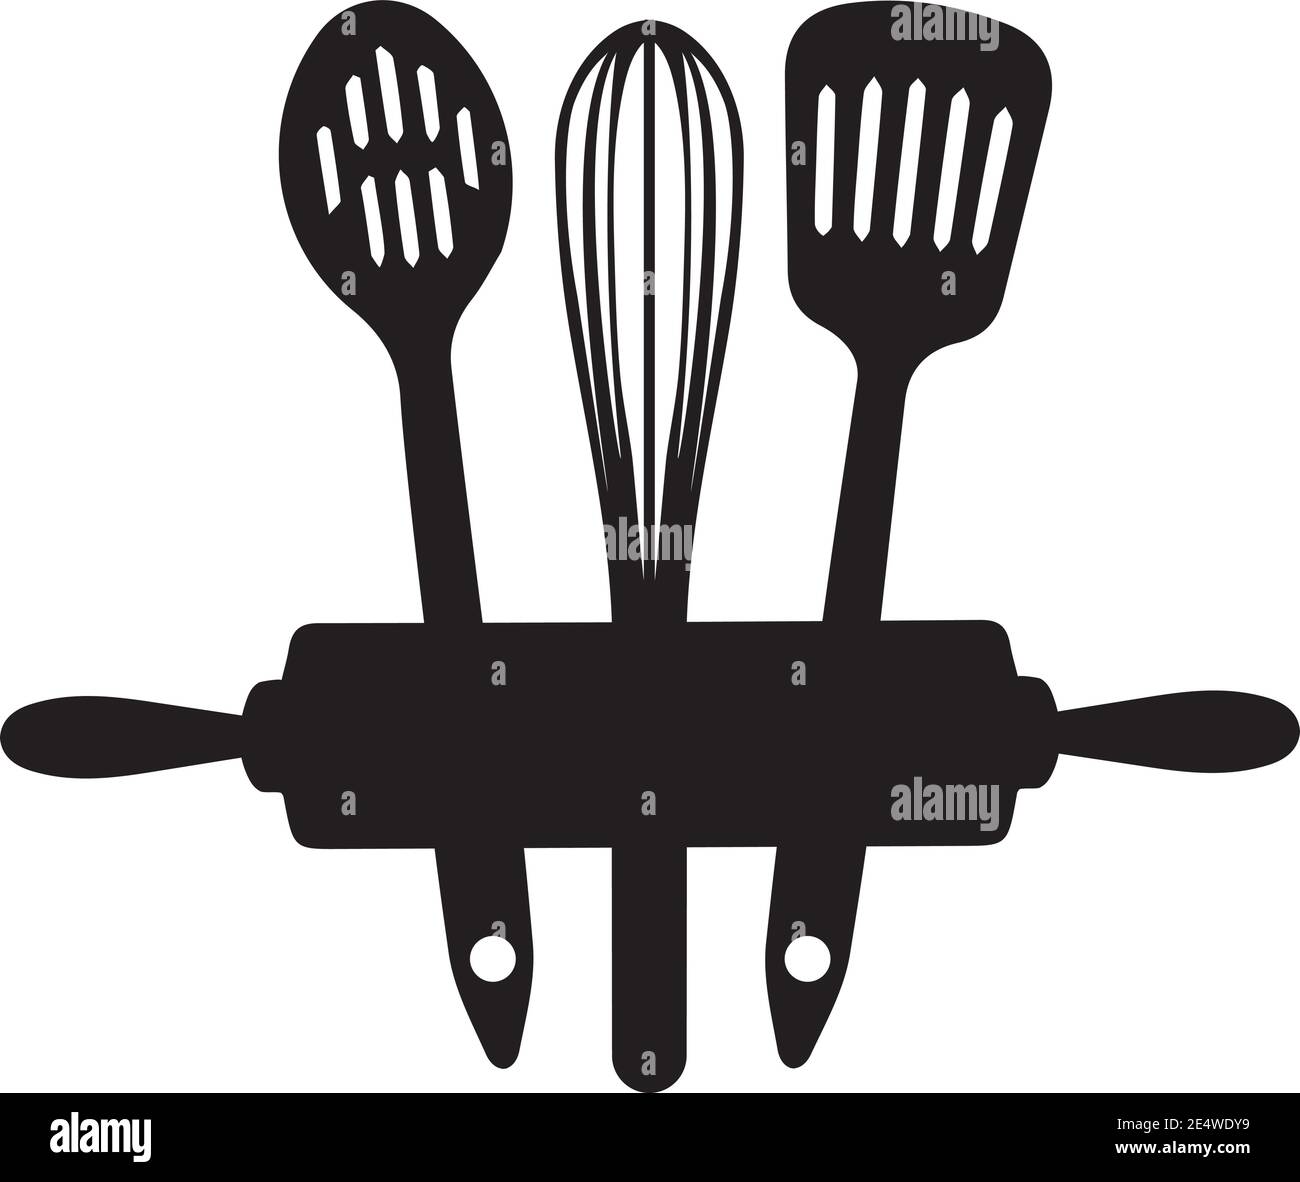 https://c8.alamy.com/comp/2E4WDY9/vector-illustration-of-kitchen-utensils-isolated-on-white-background-2E4WDY9.jpg